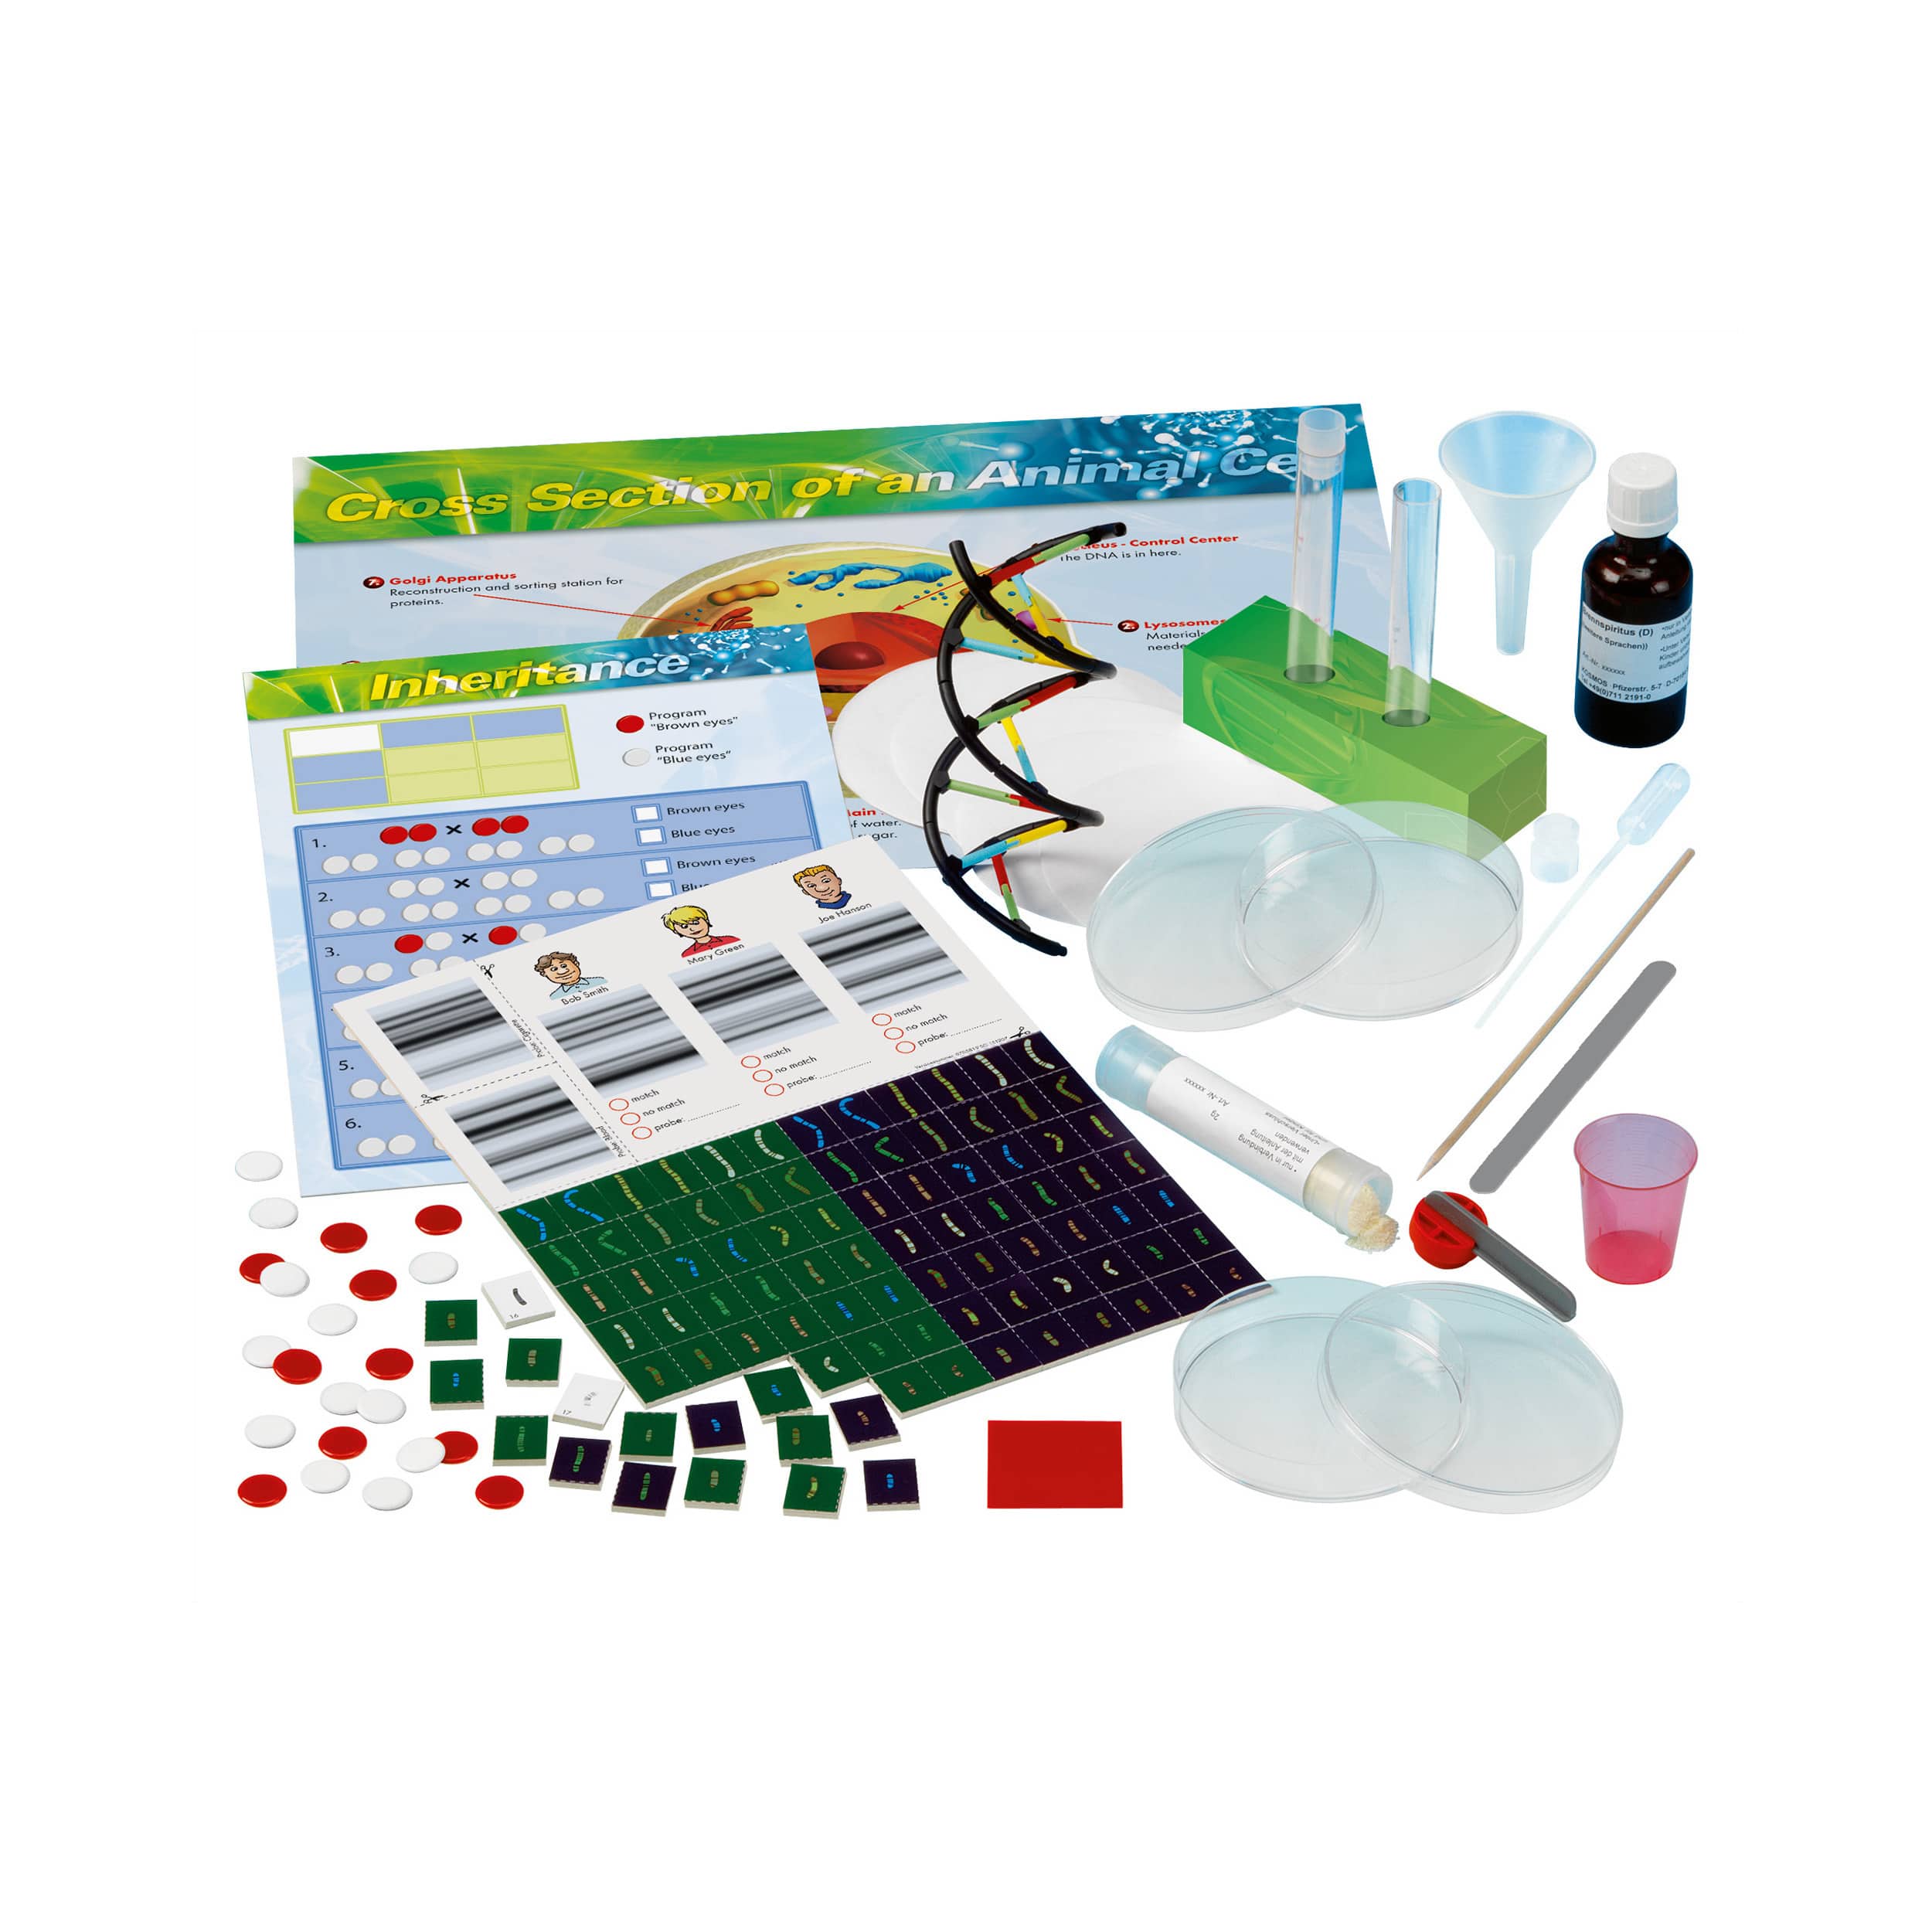 Thames &#x26; Kosmos Genetics &#x26; DNA Lab Kit